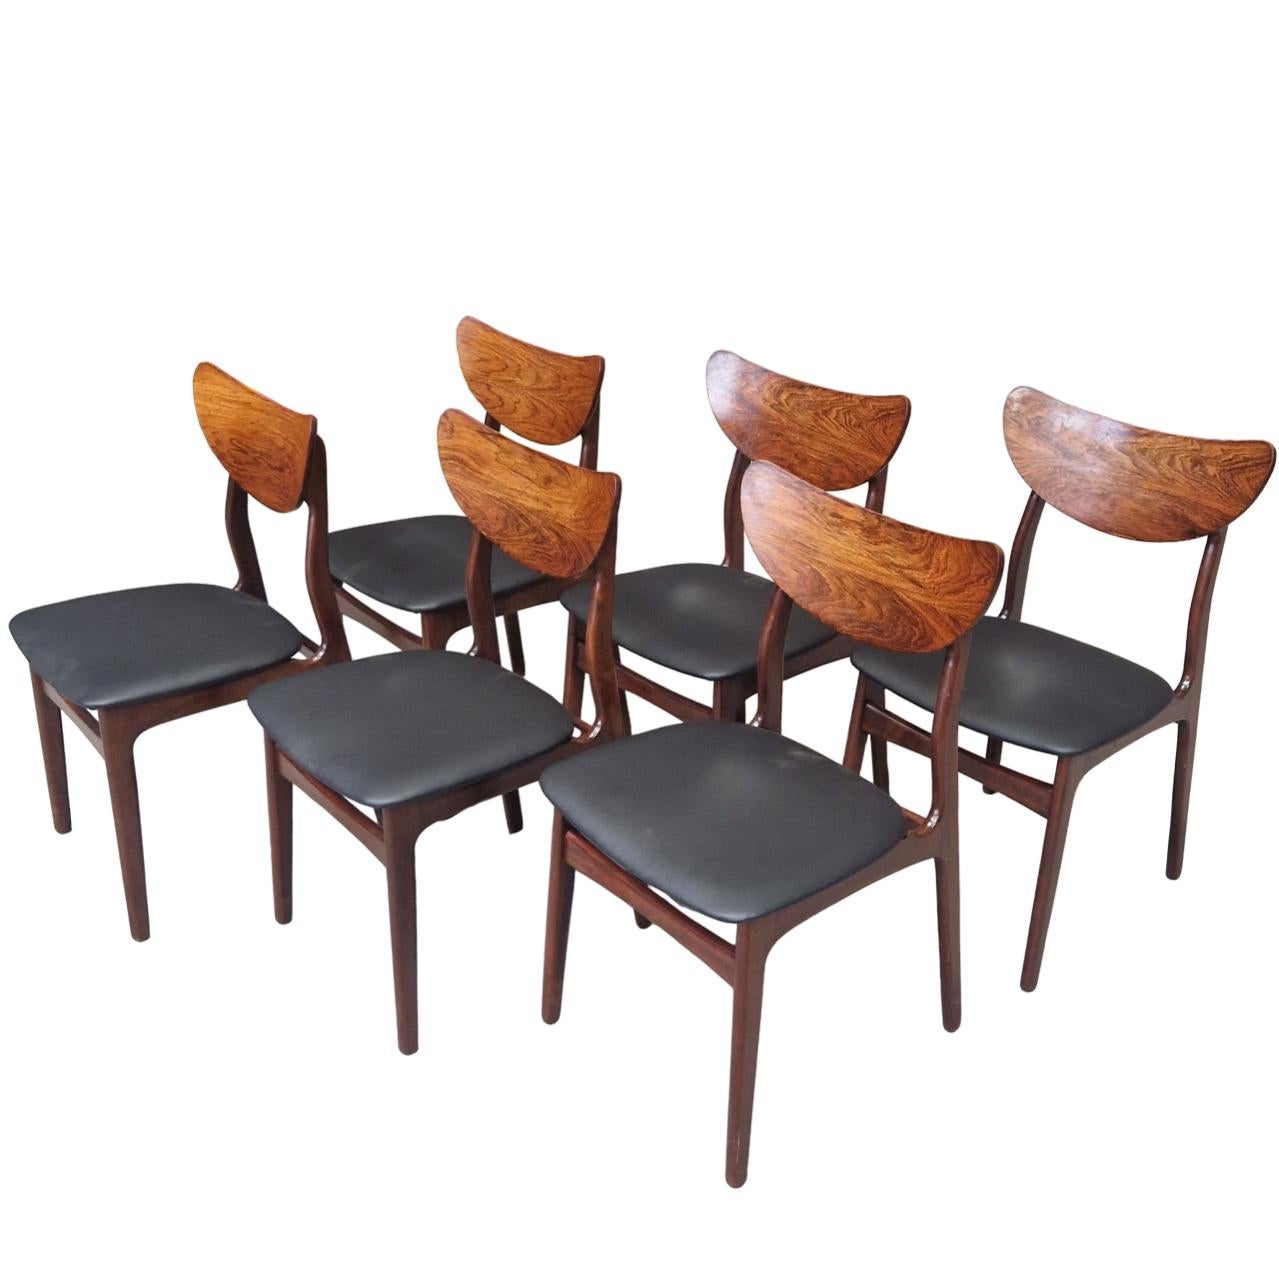 Beautiful and elegant set of six chairs